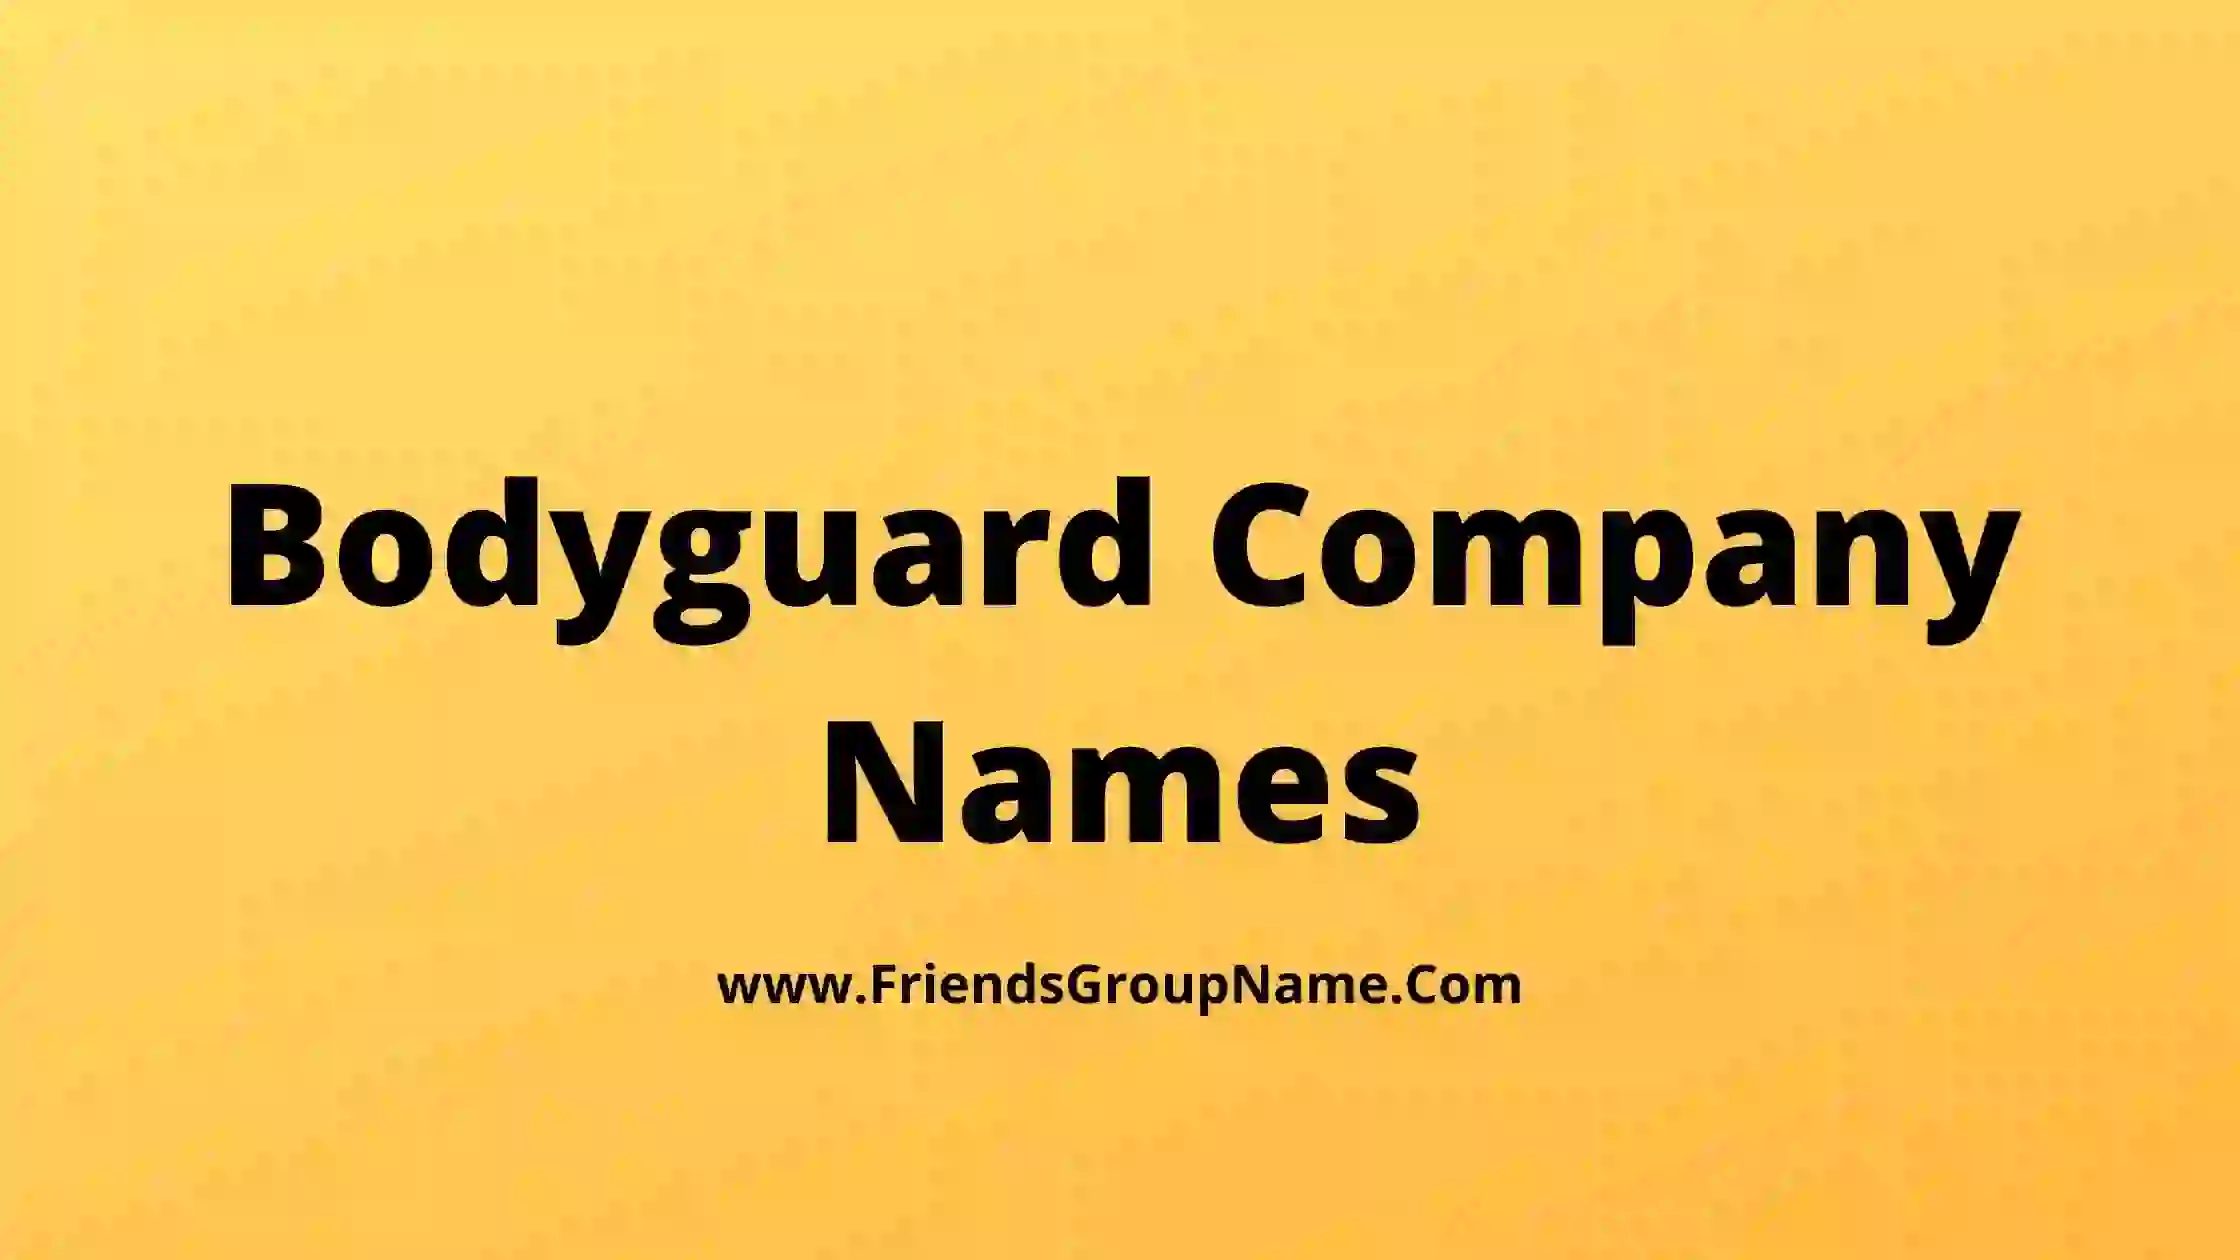 Bodyguard Company Names